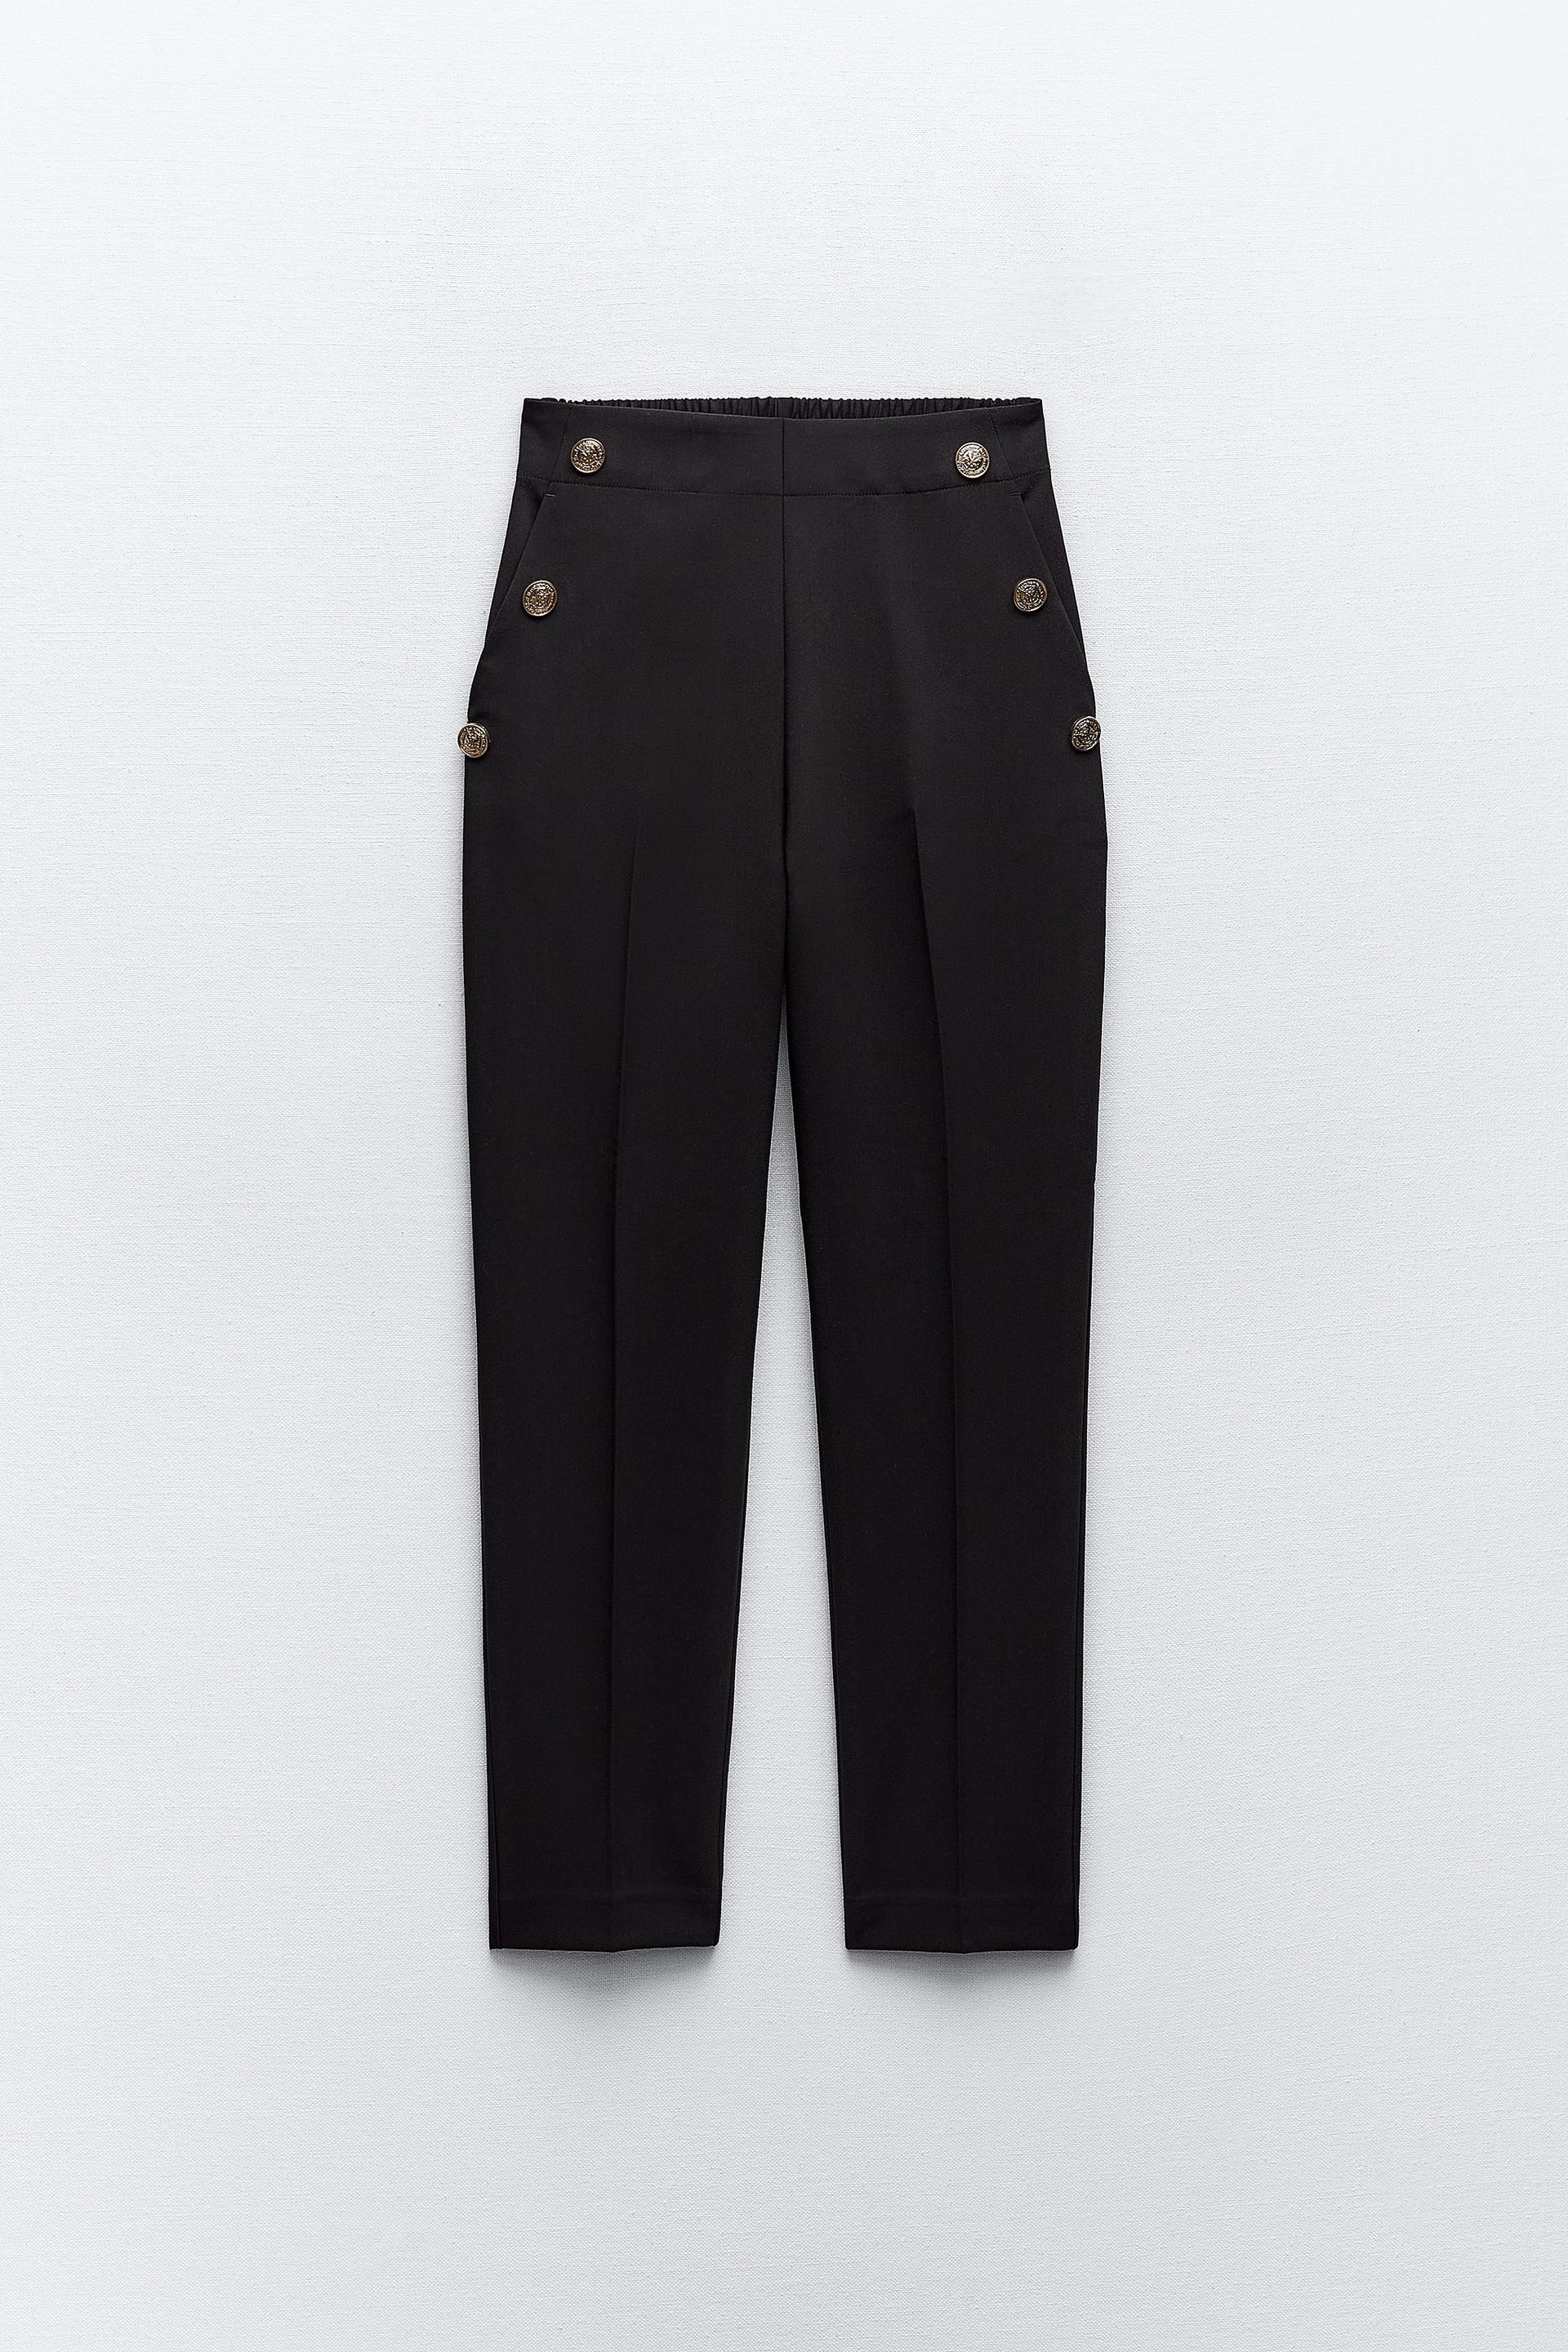 Zara Black Shiny Semi Sheer Straight Leg Pants Size XS